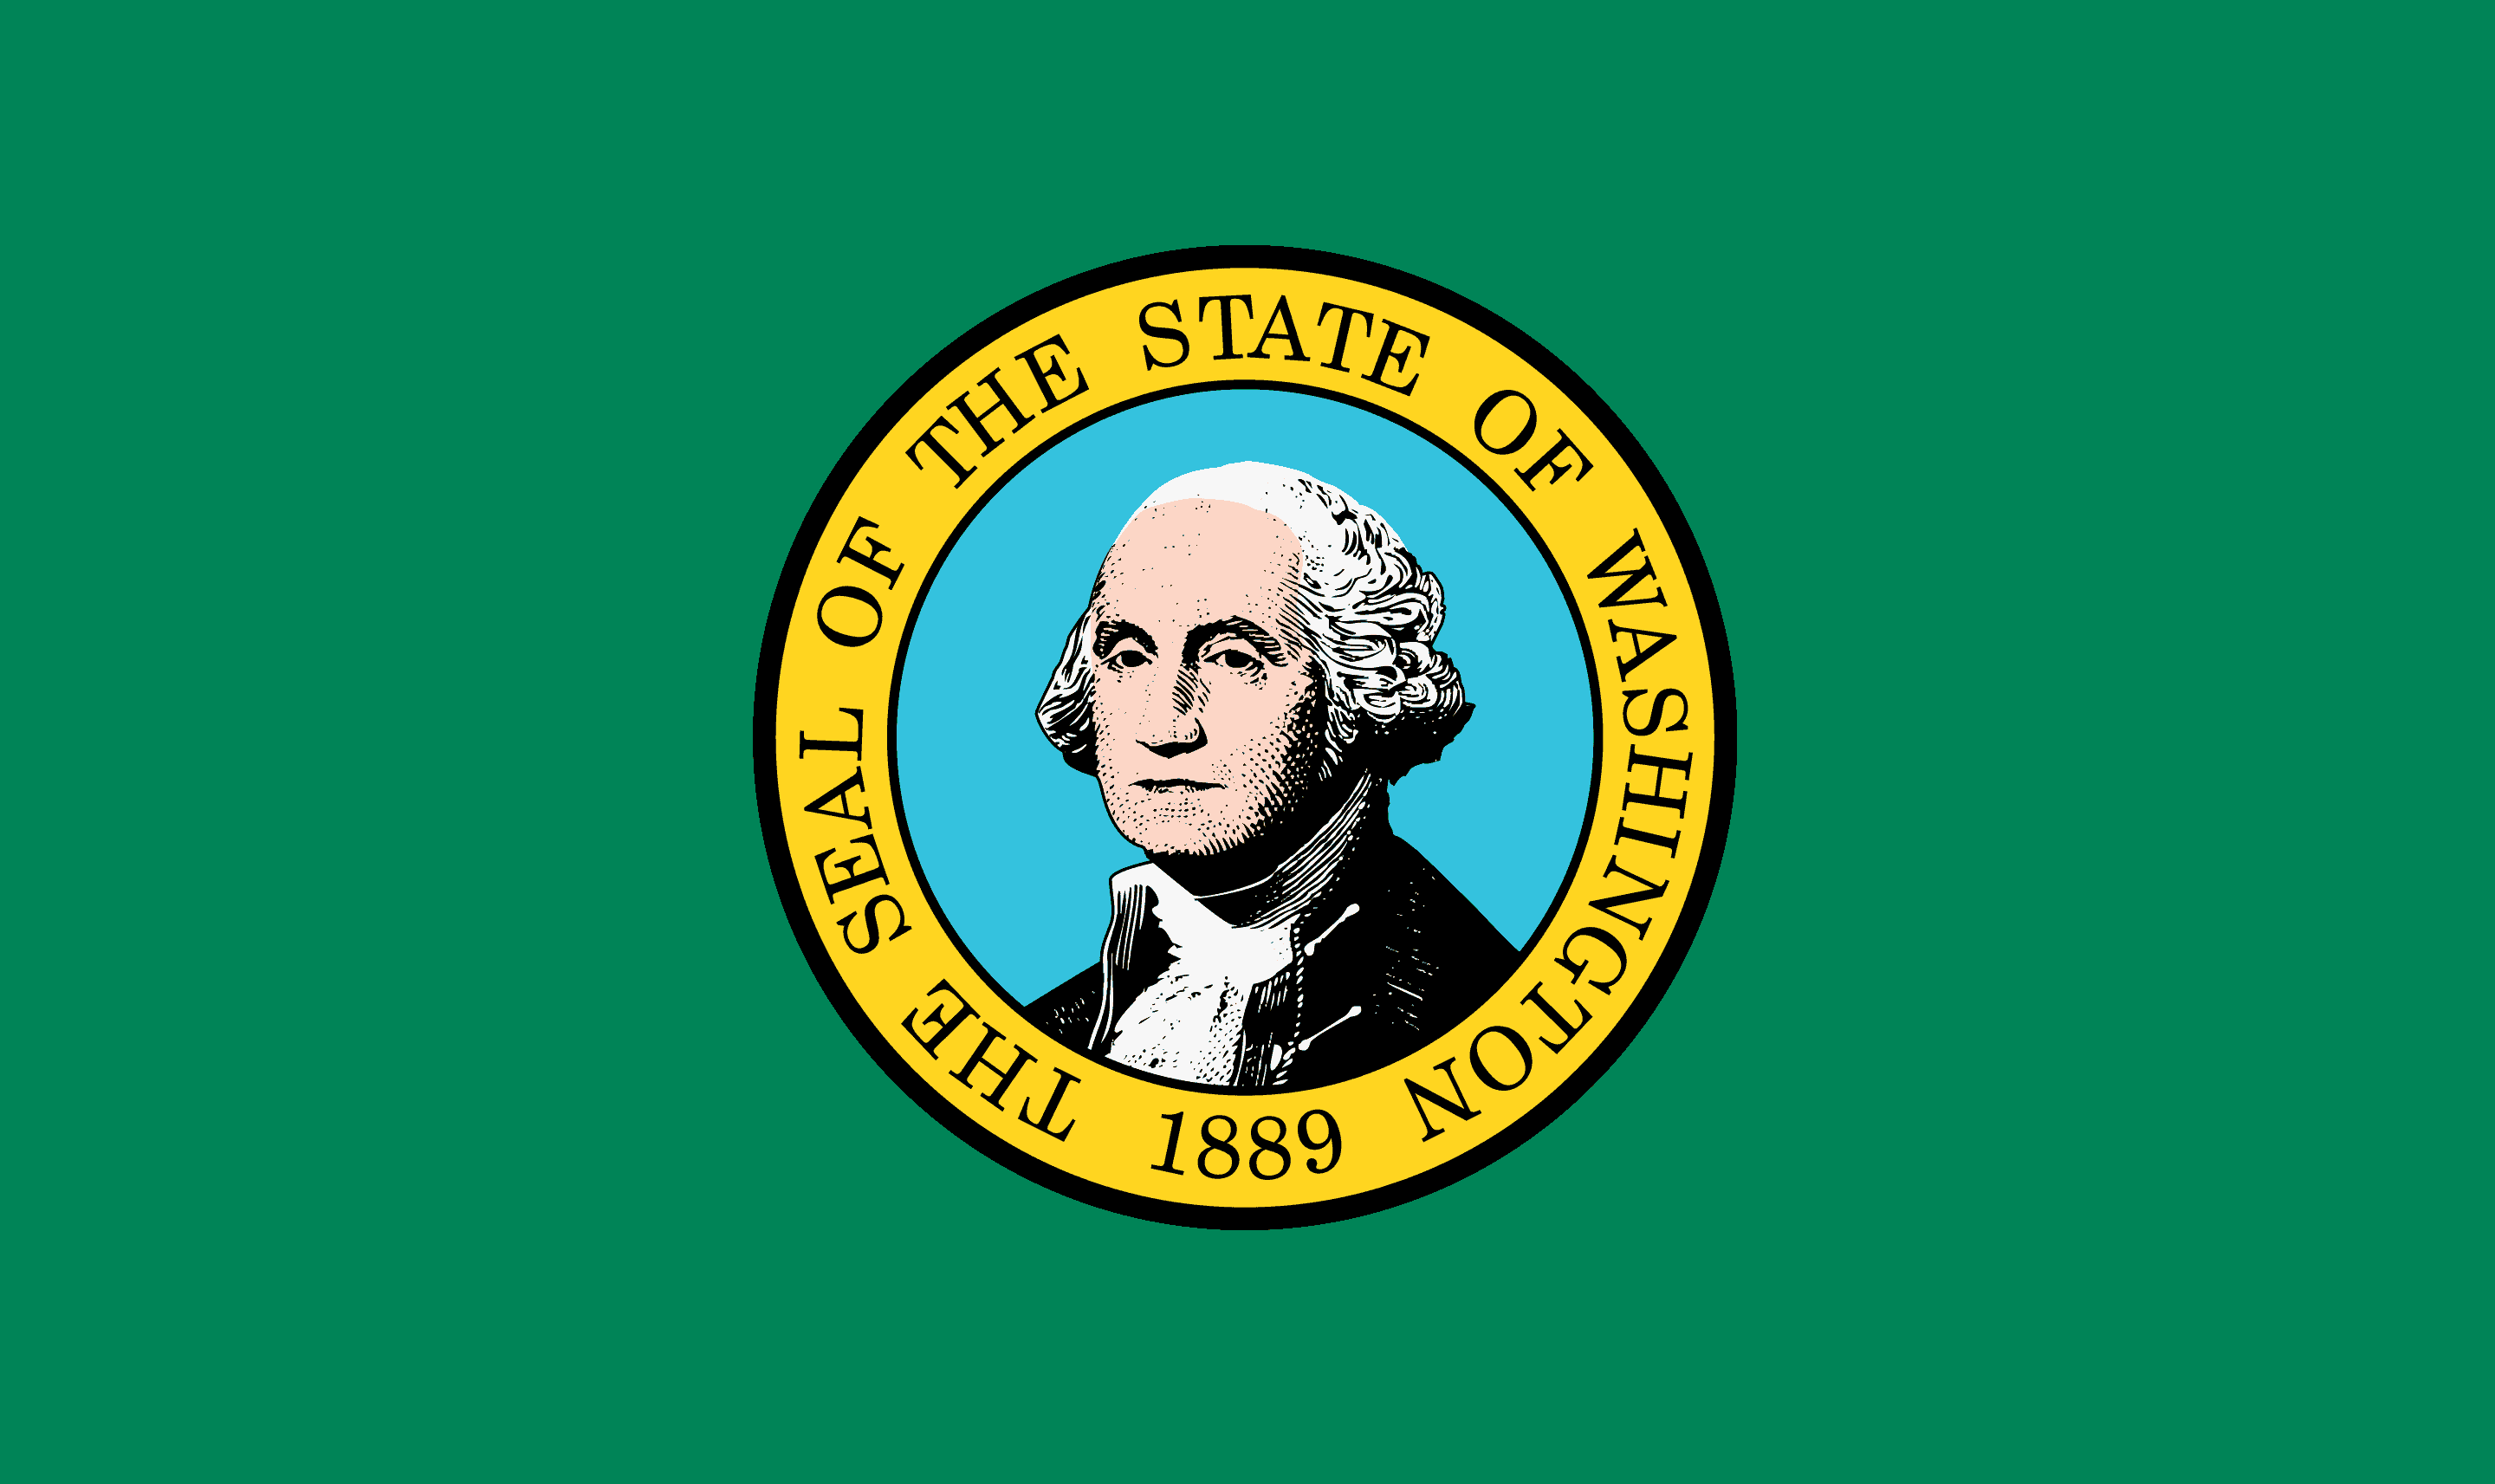 State of Washington Flag - Washington Drone Laws